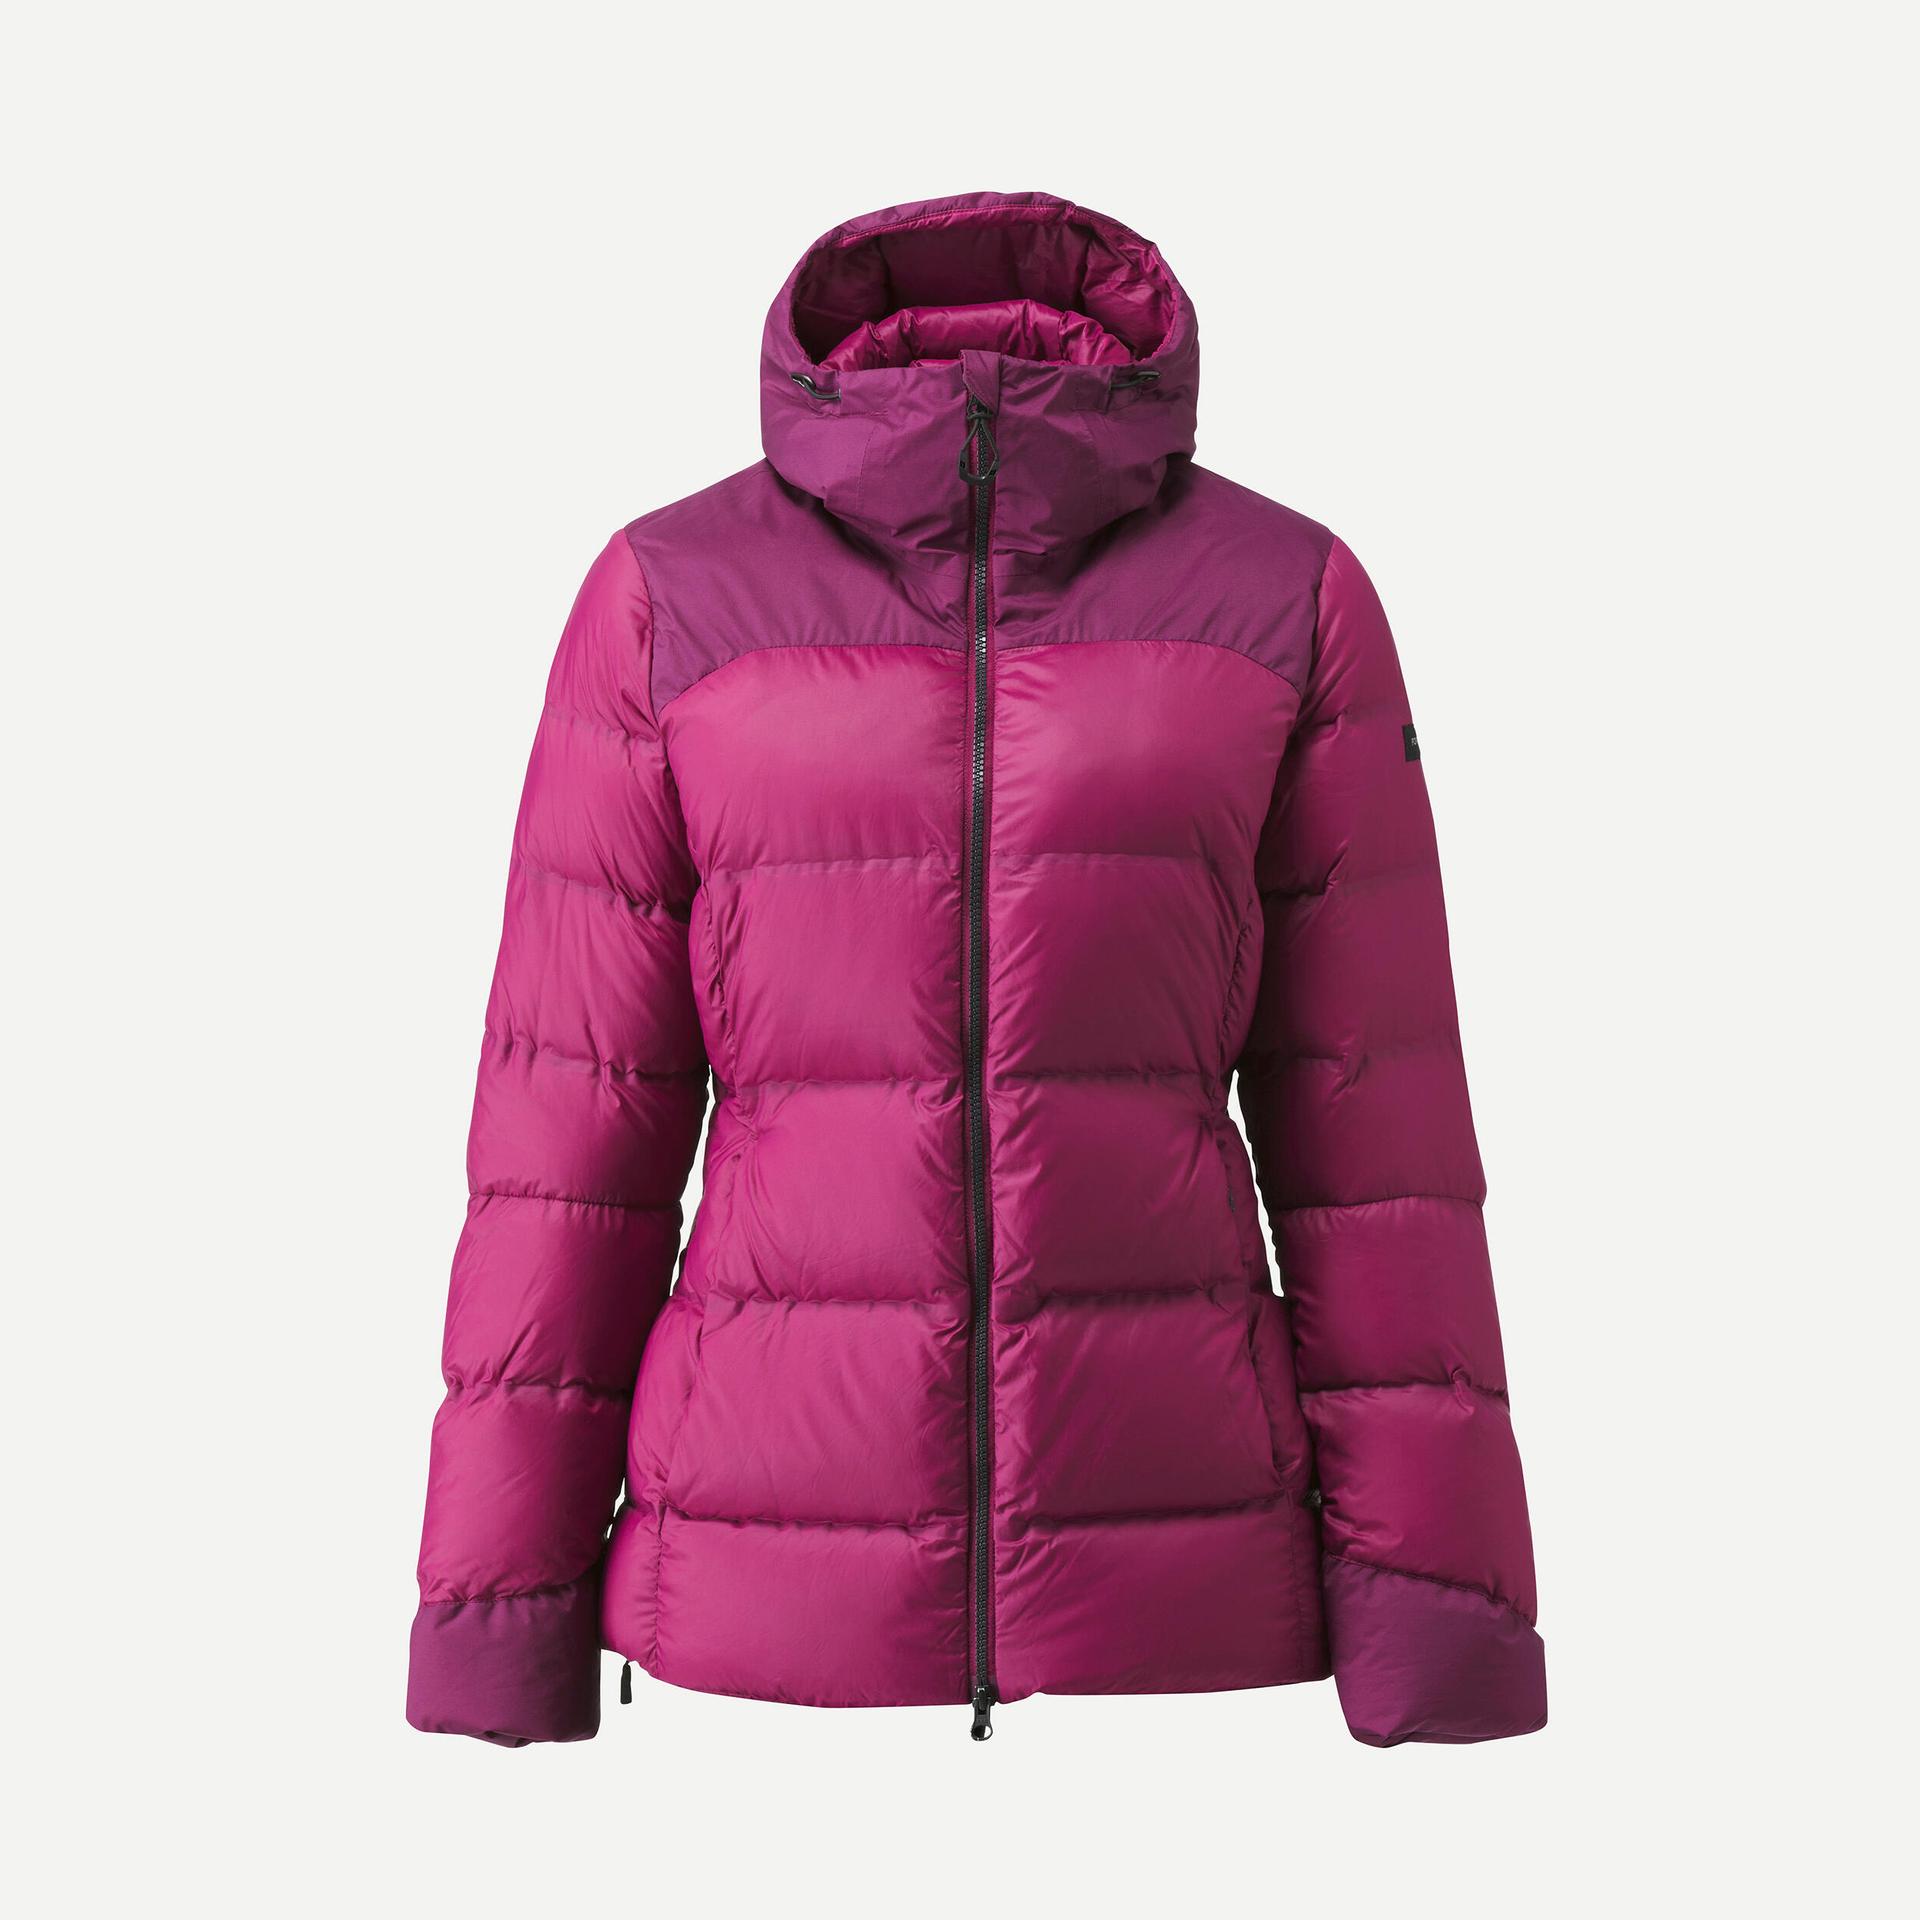 women's mountain trekking down jacket with hood - mt900 -18°c purple